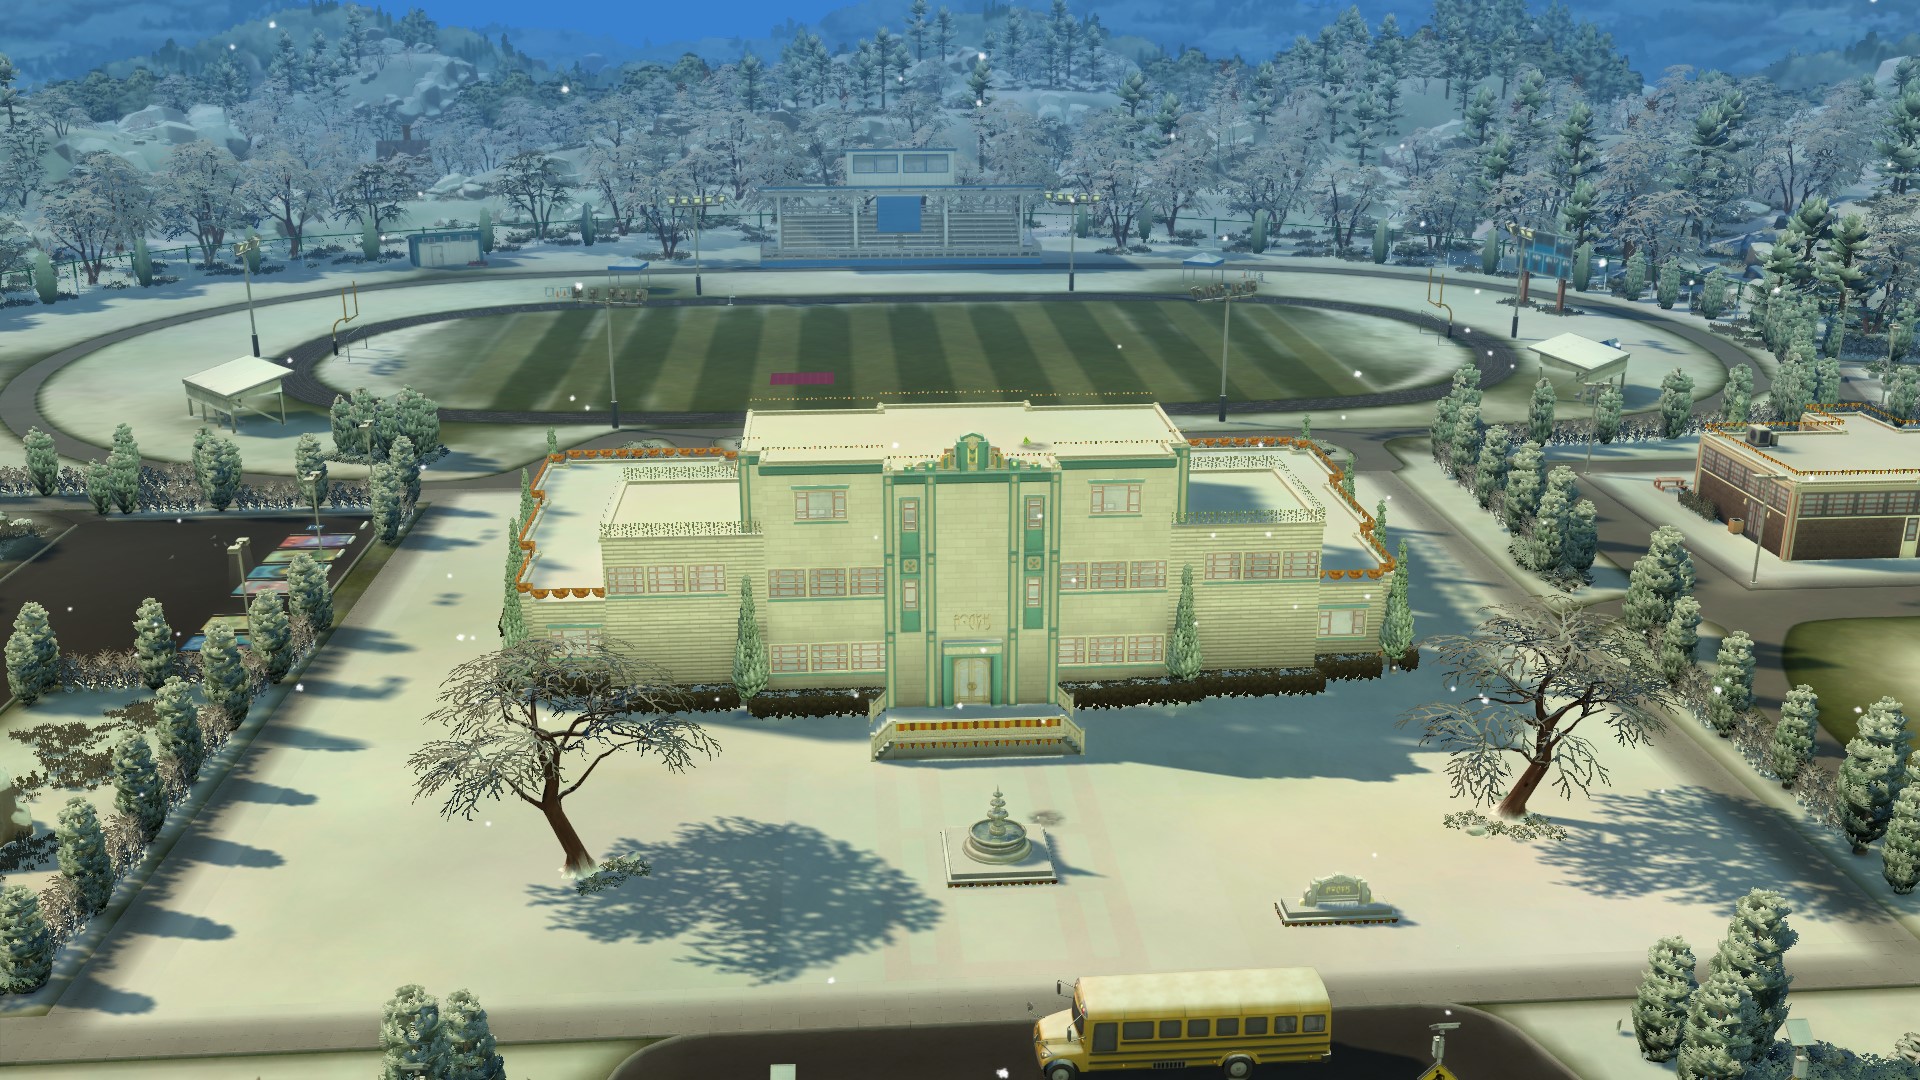 The Sims 4 Vida Universitária – Review completo por Alala Sims - Alala Sims